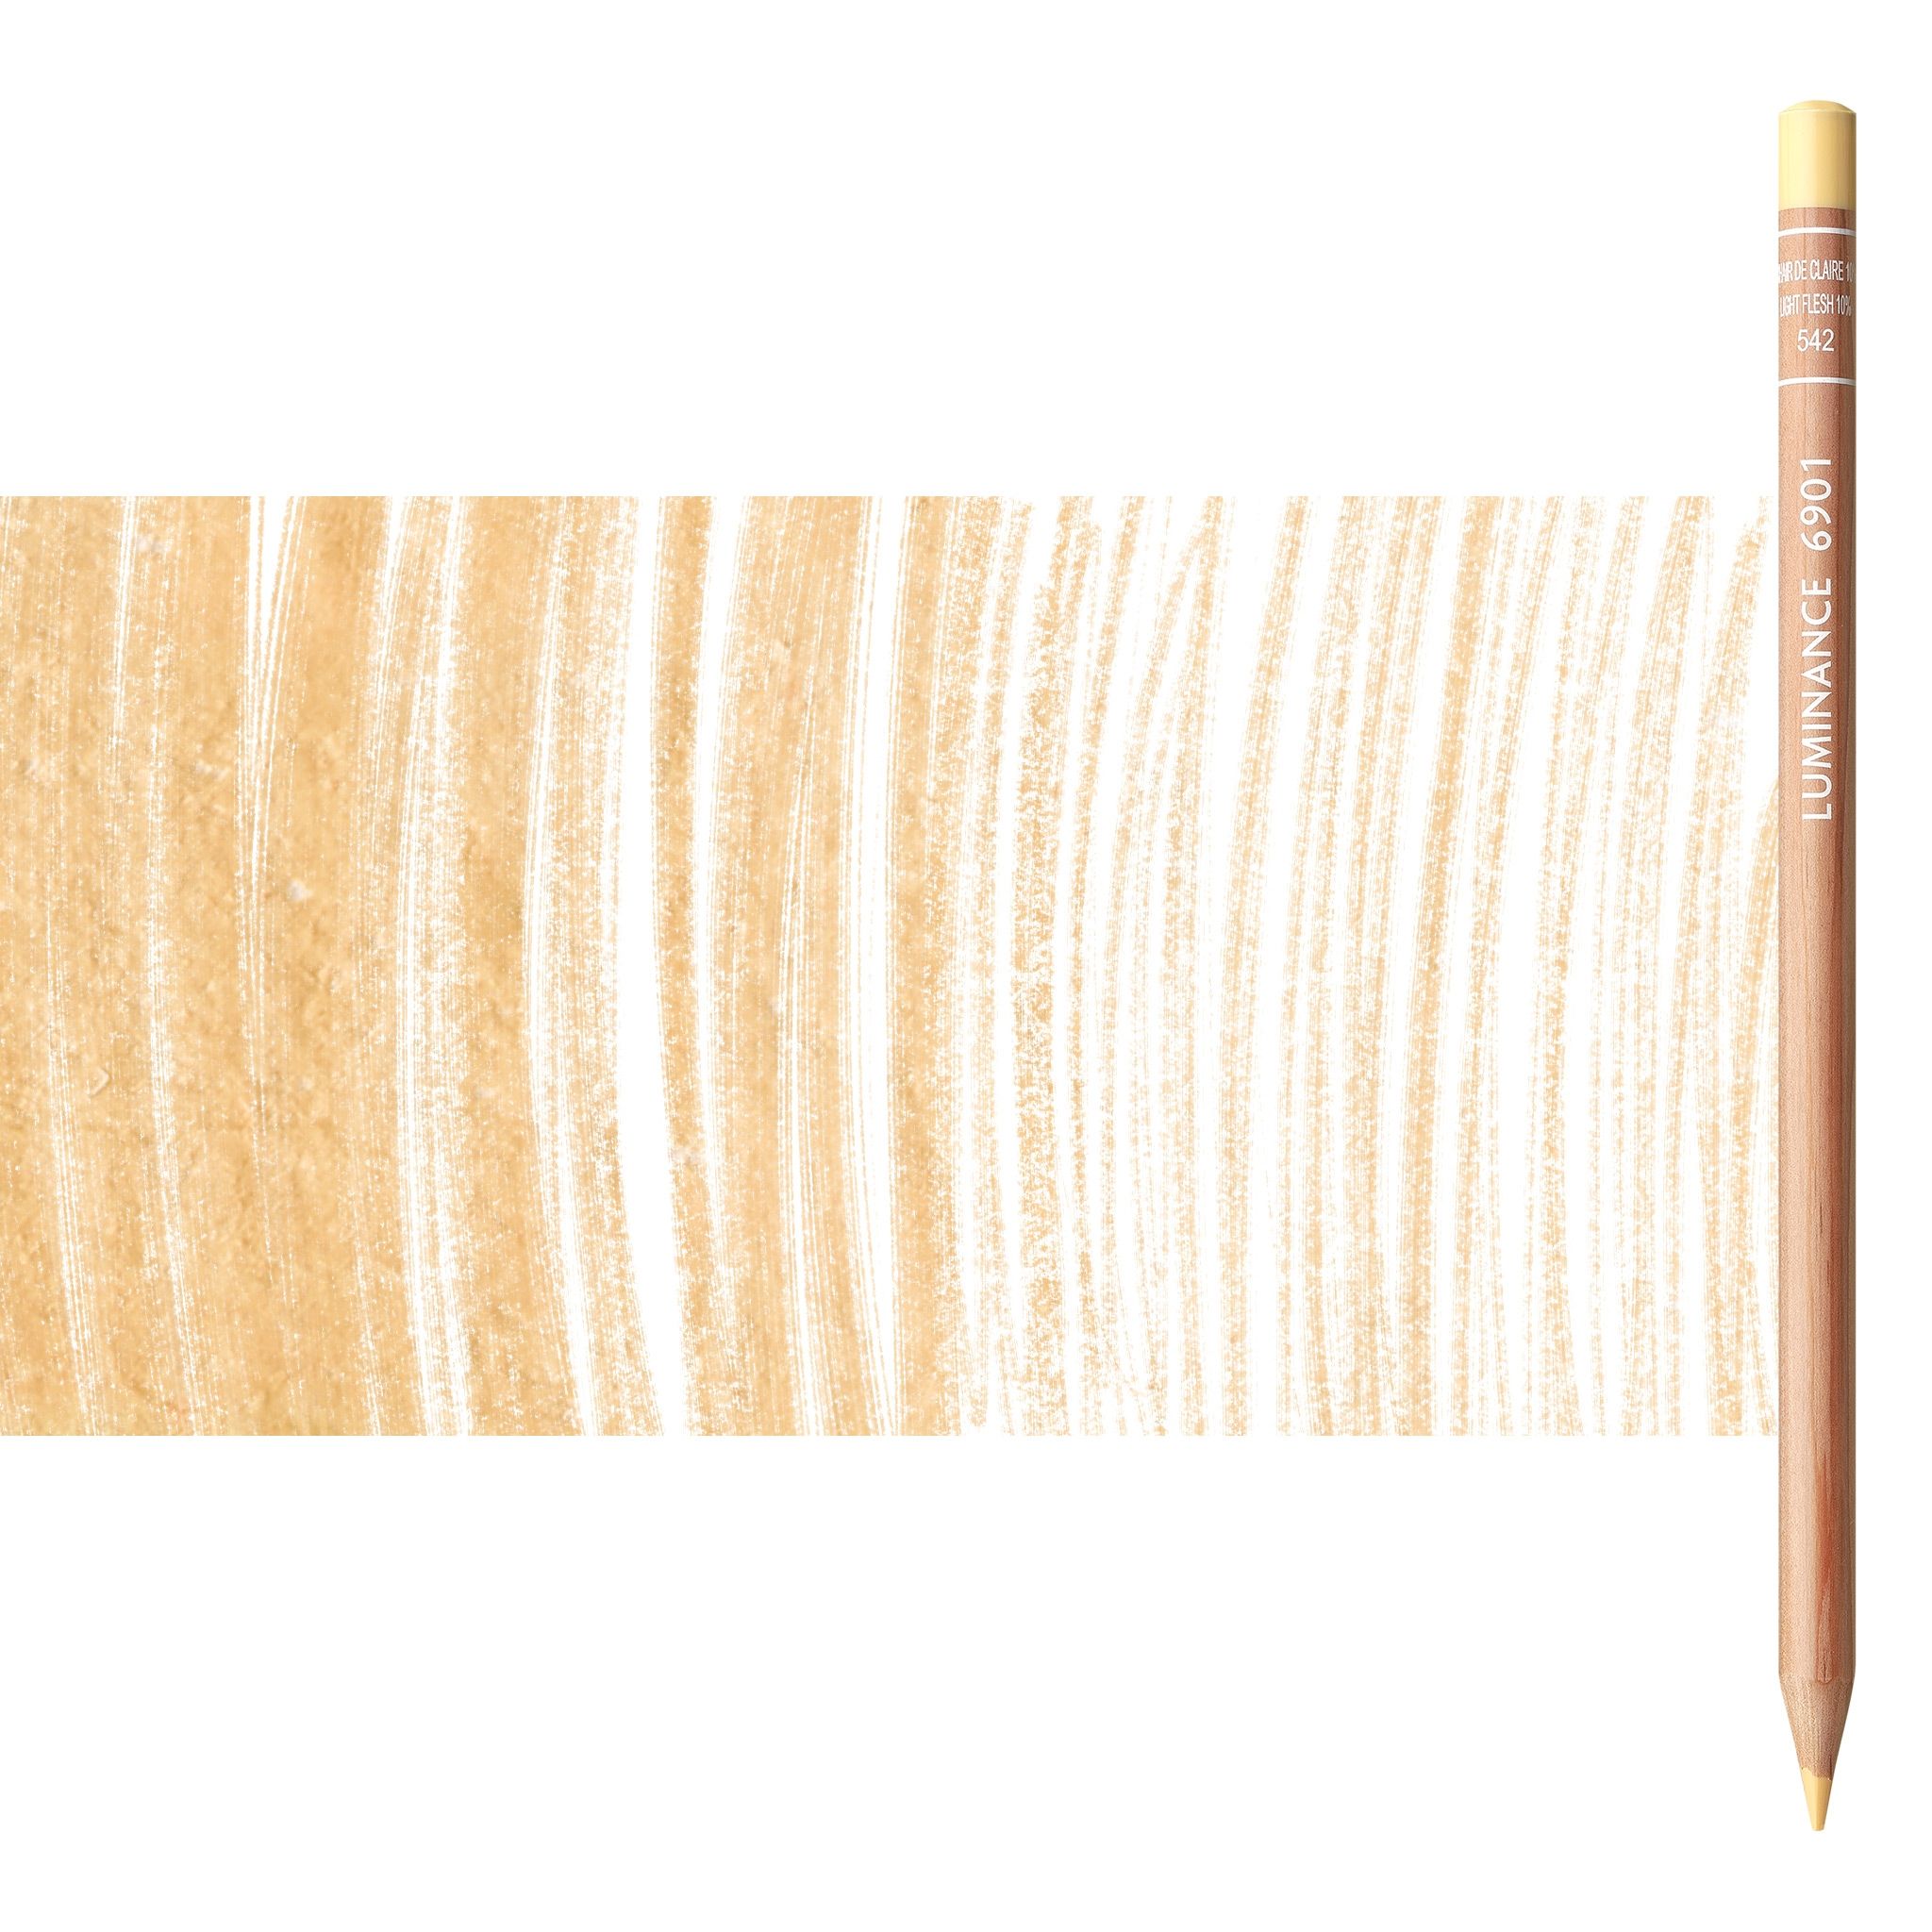 Caran D'Ache Color Pencil Set - Luminance 6901 Lightfast Colored Pencil Set  of 72 Assorted Colors 